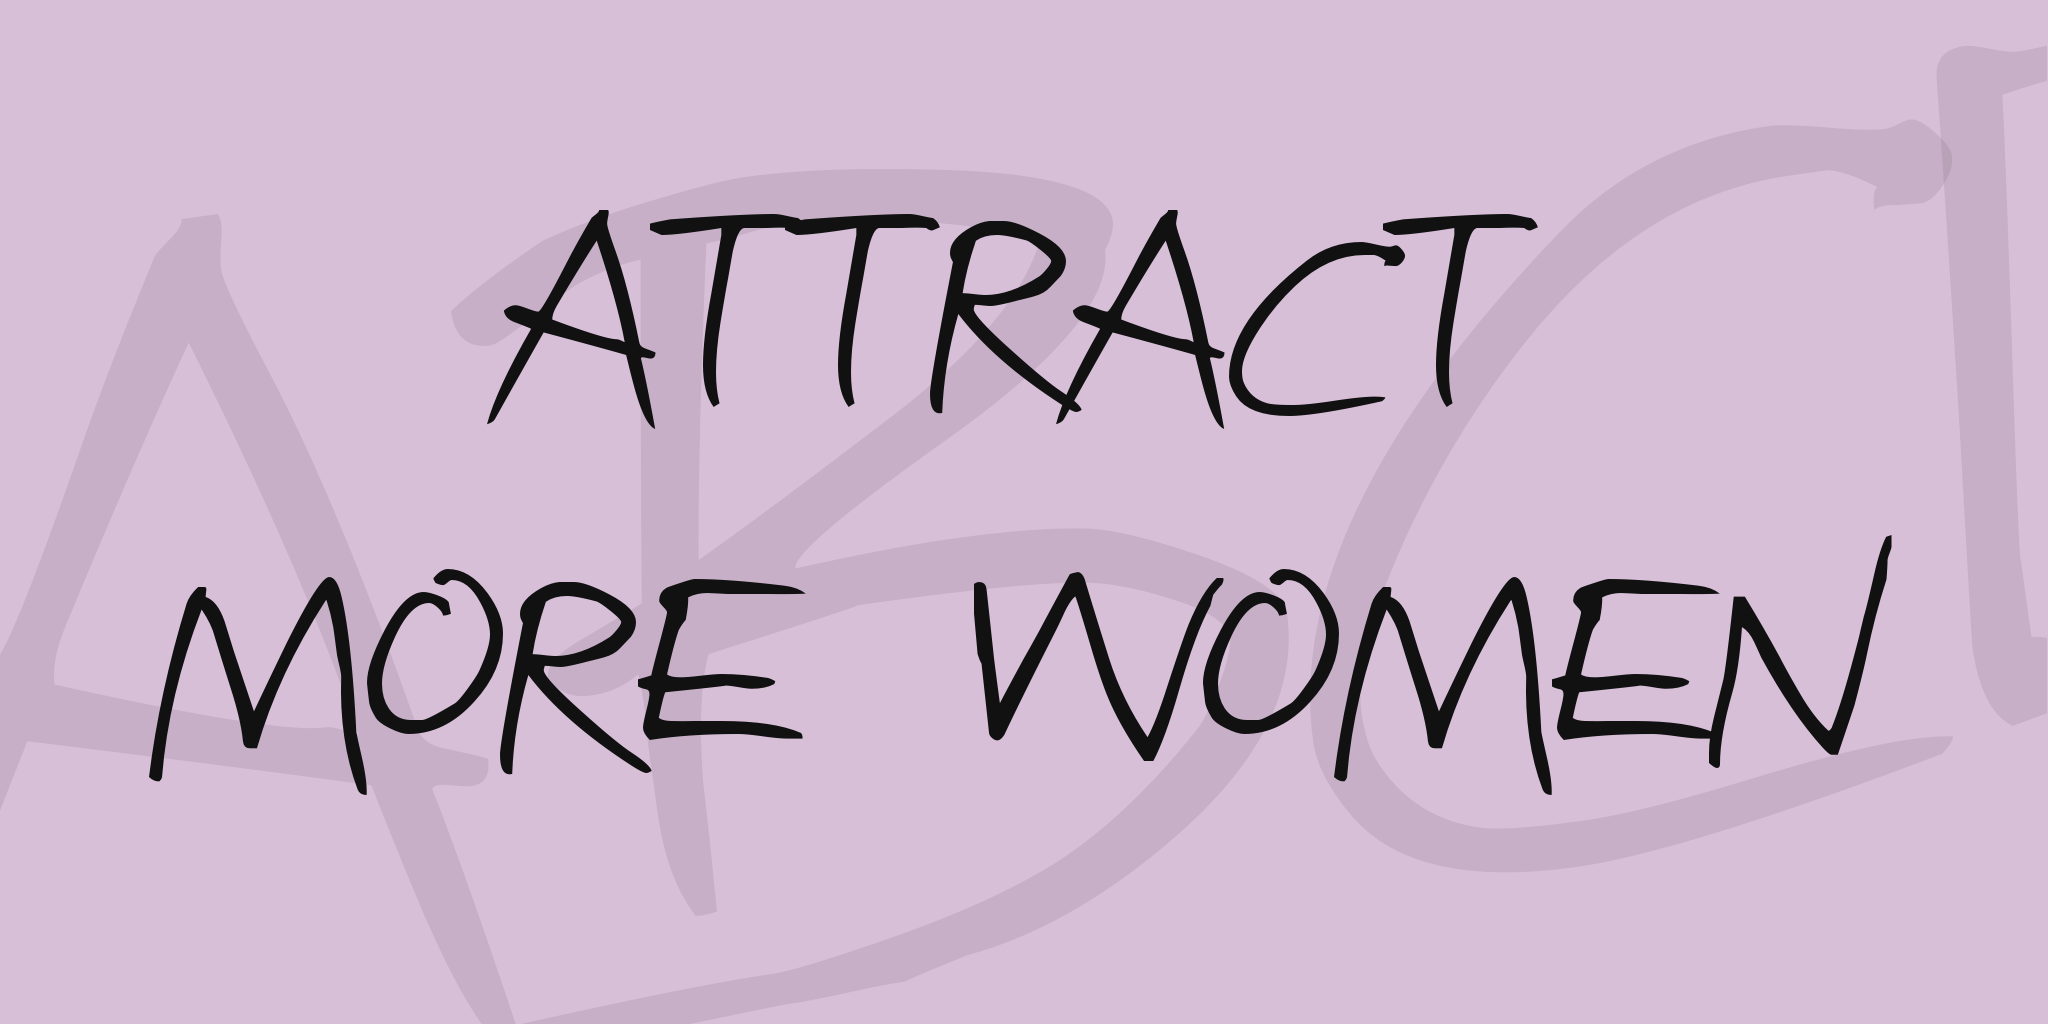 Attract More Women